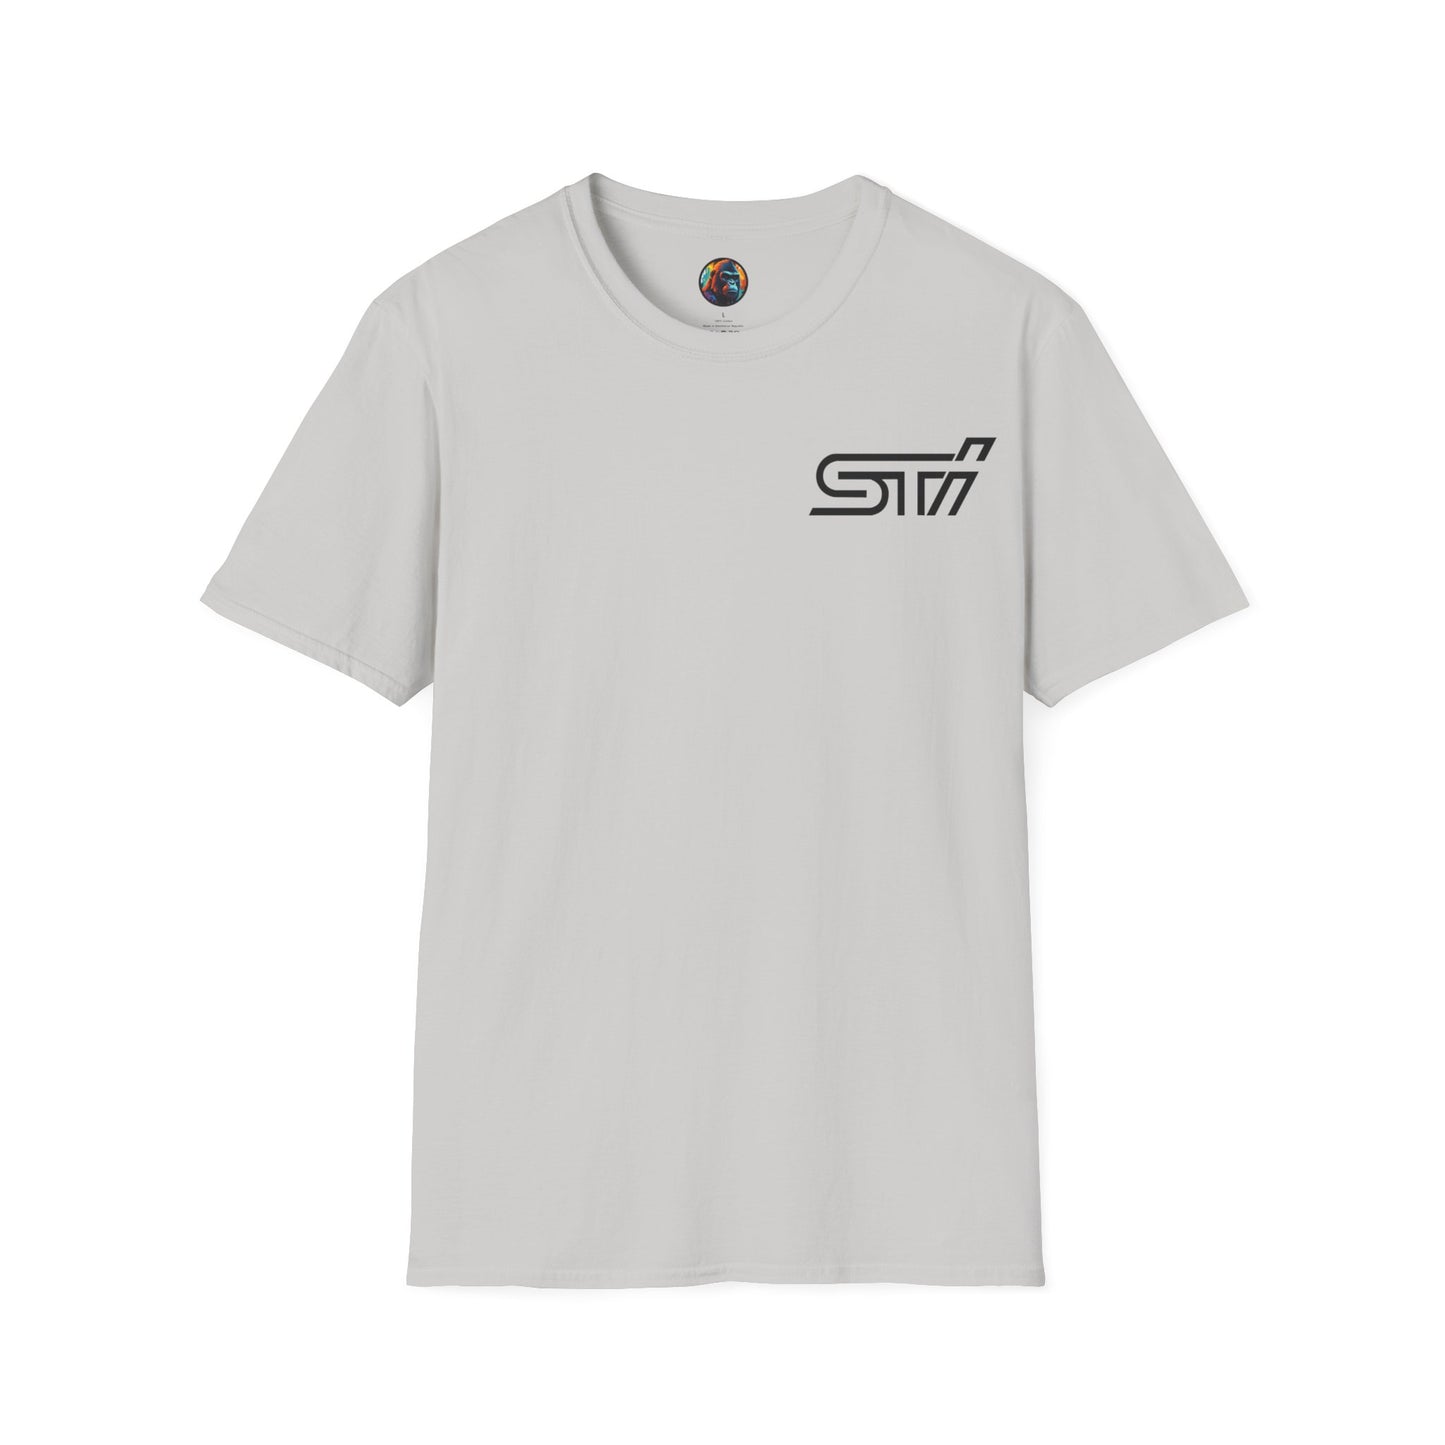 Subaru WRX STI Hawkeye Front and Back T-Shirt